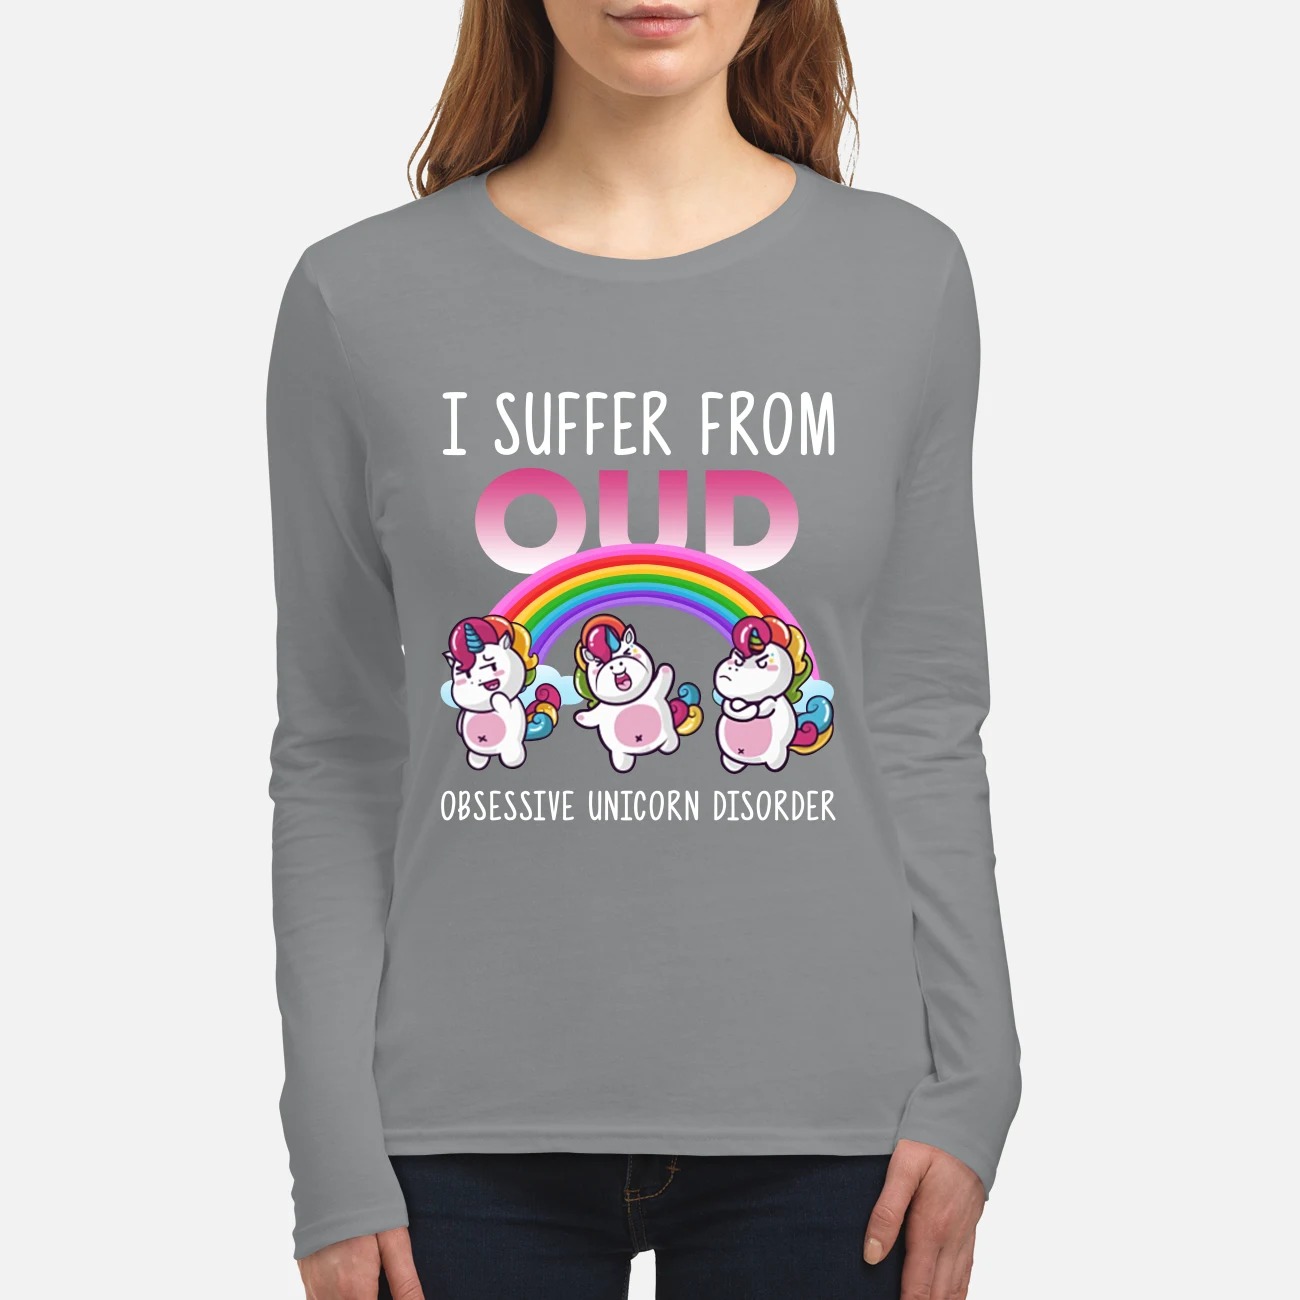 I suffer from OUD Obsessive unicorn disorder women's long sleeved shirt